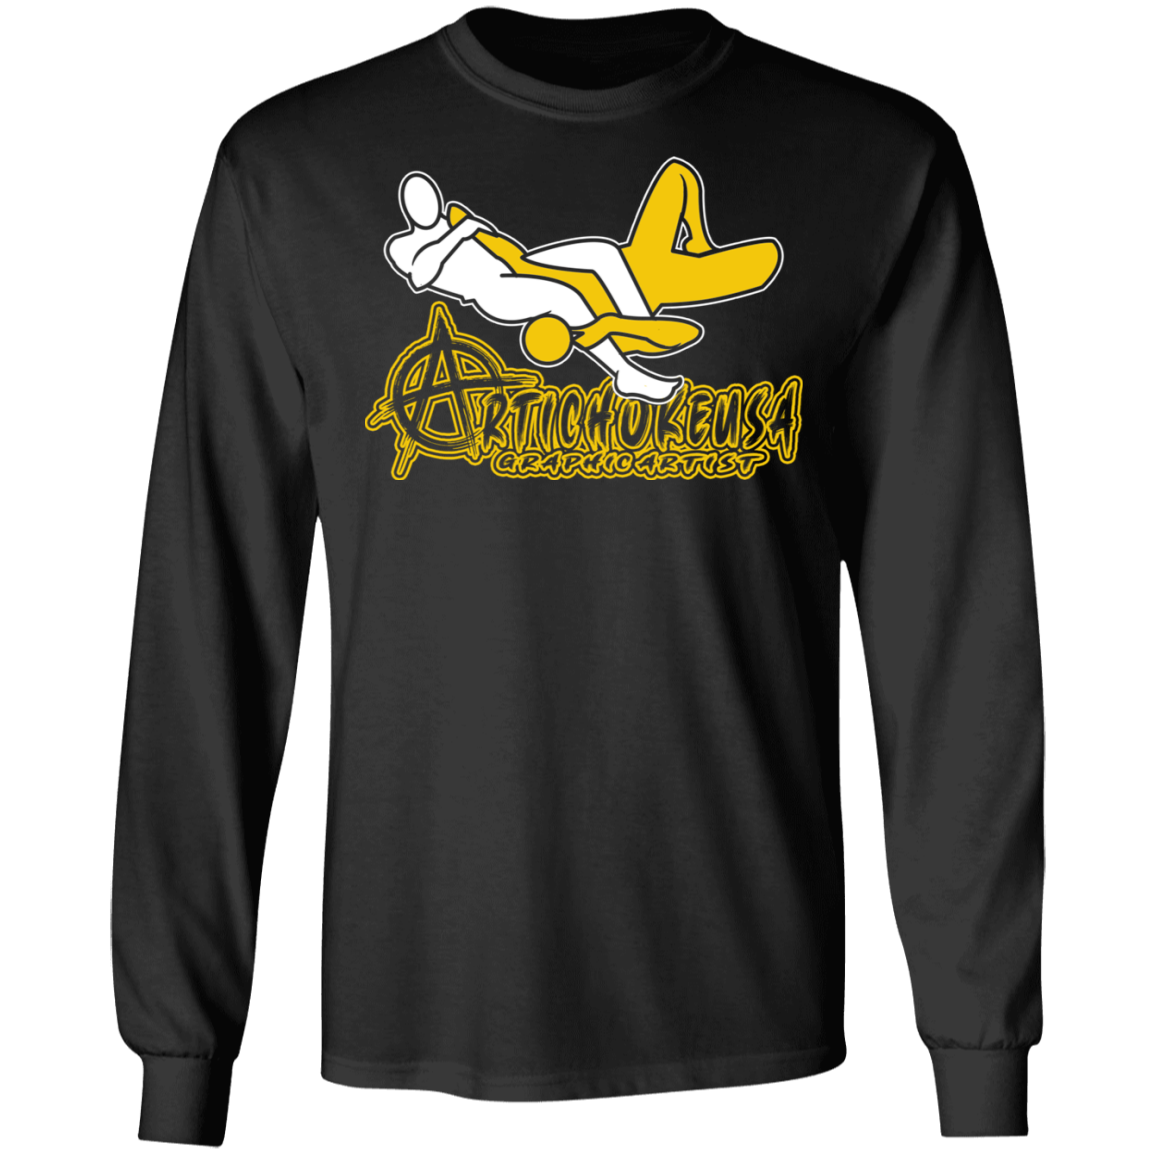 ArtichokeUSA Custom Design #54. Artichoke USArmbar. US Army Parody. Long Sleeve T-Shirt